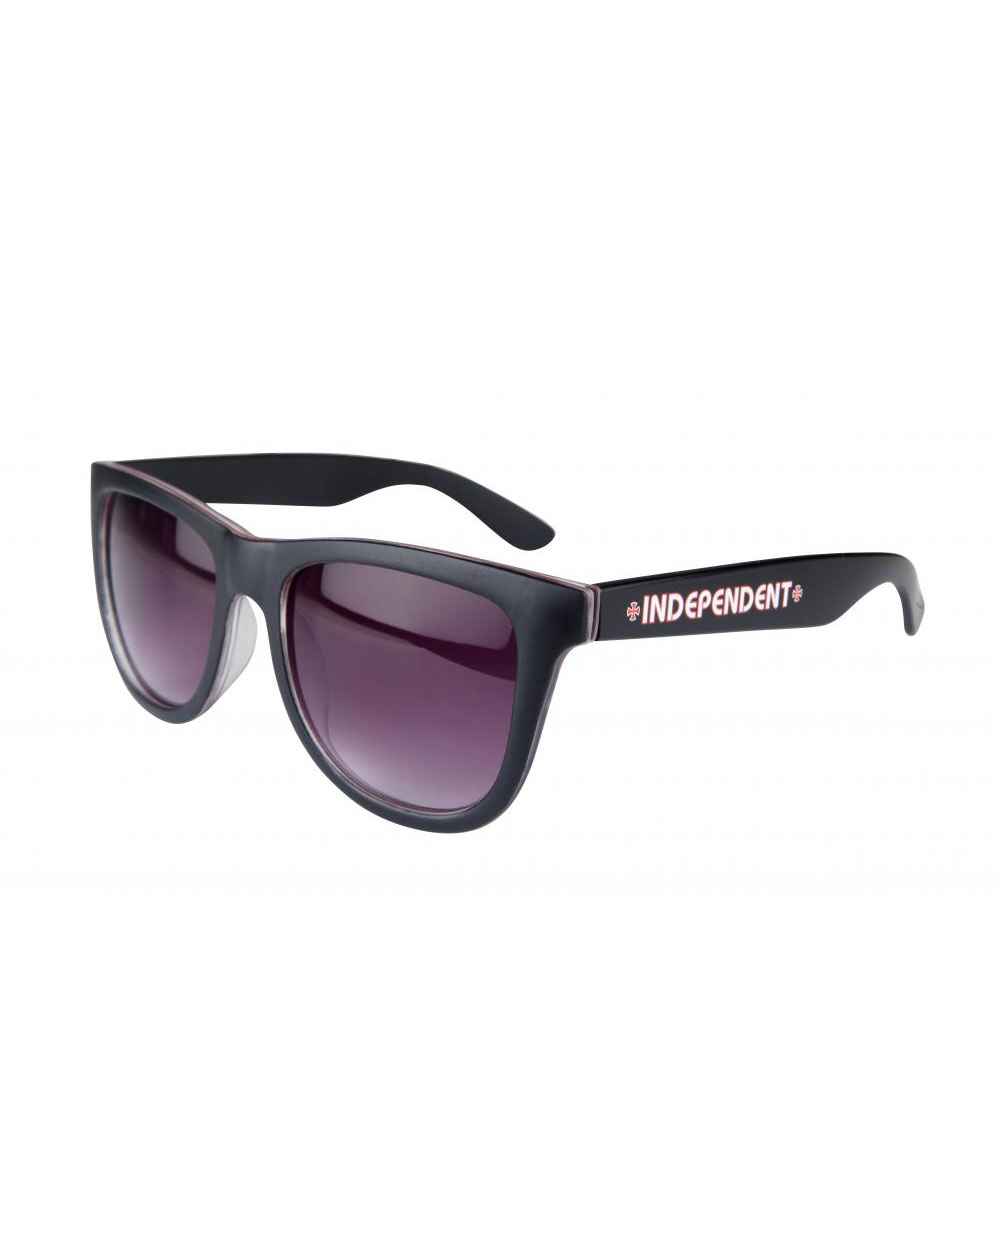 Independent Men's Sunglasses Bar/Cross Black